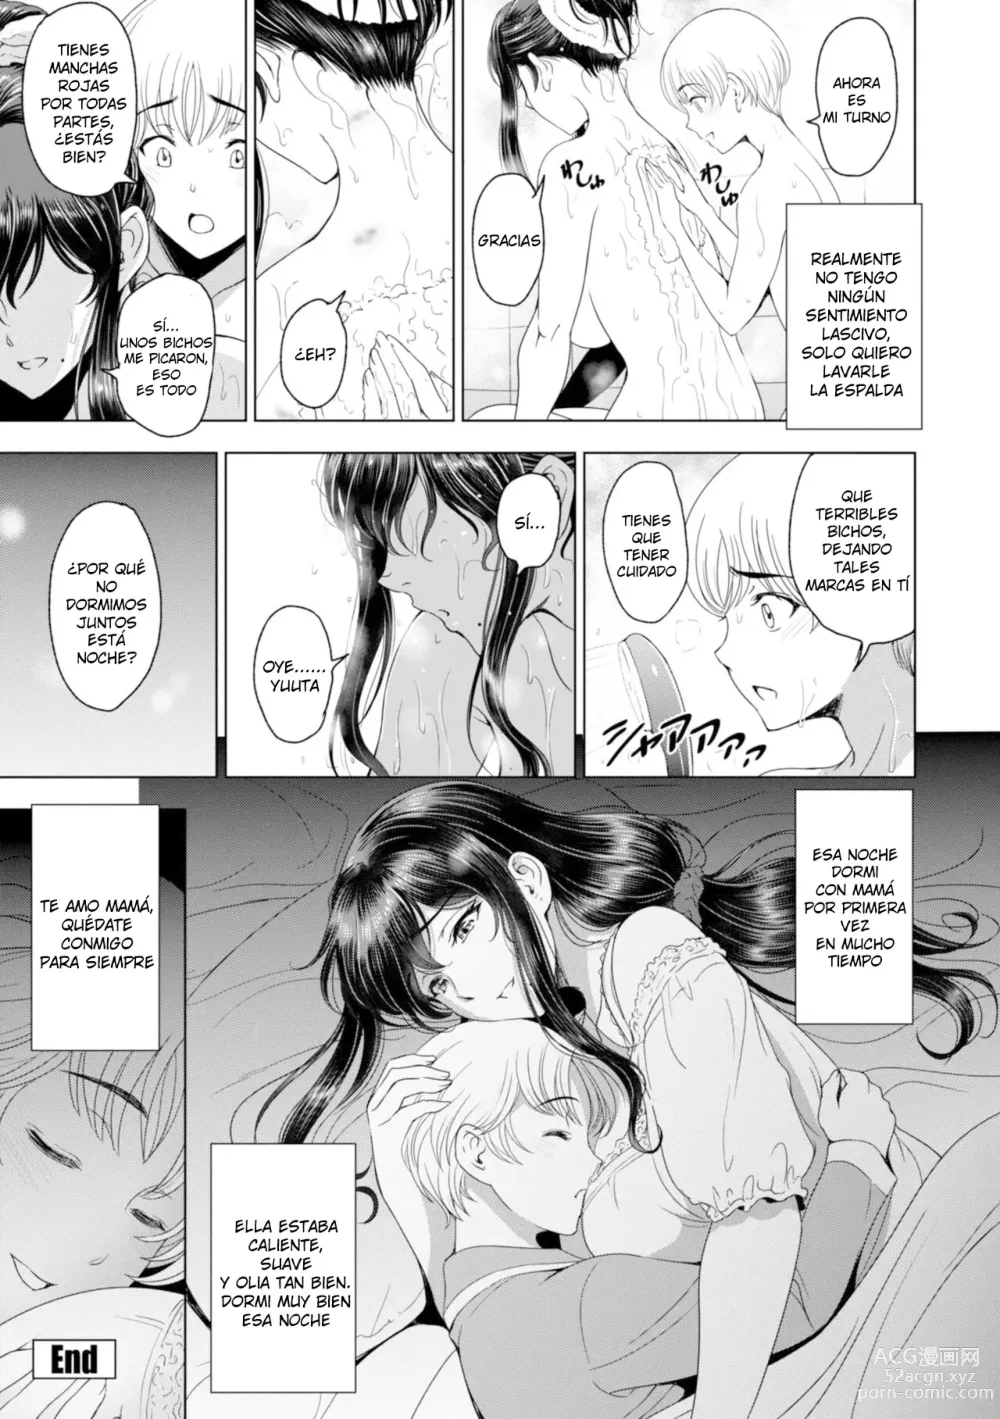 Page 7 of manga Nettori Netorare EP. 0.5, EP. 11.5 ~Esposa . El caso de Saori Sudou (extra)~